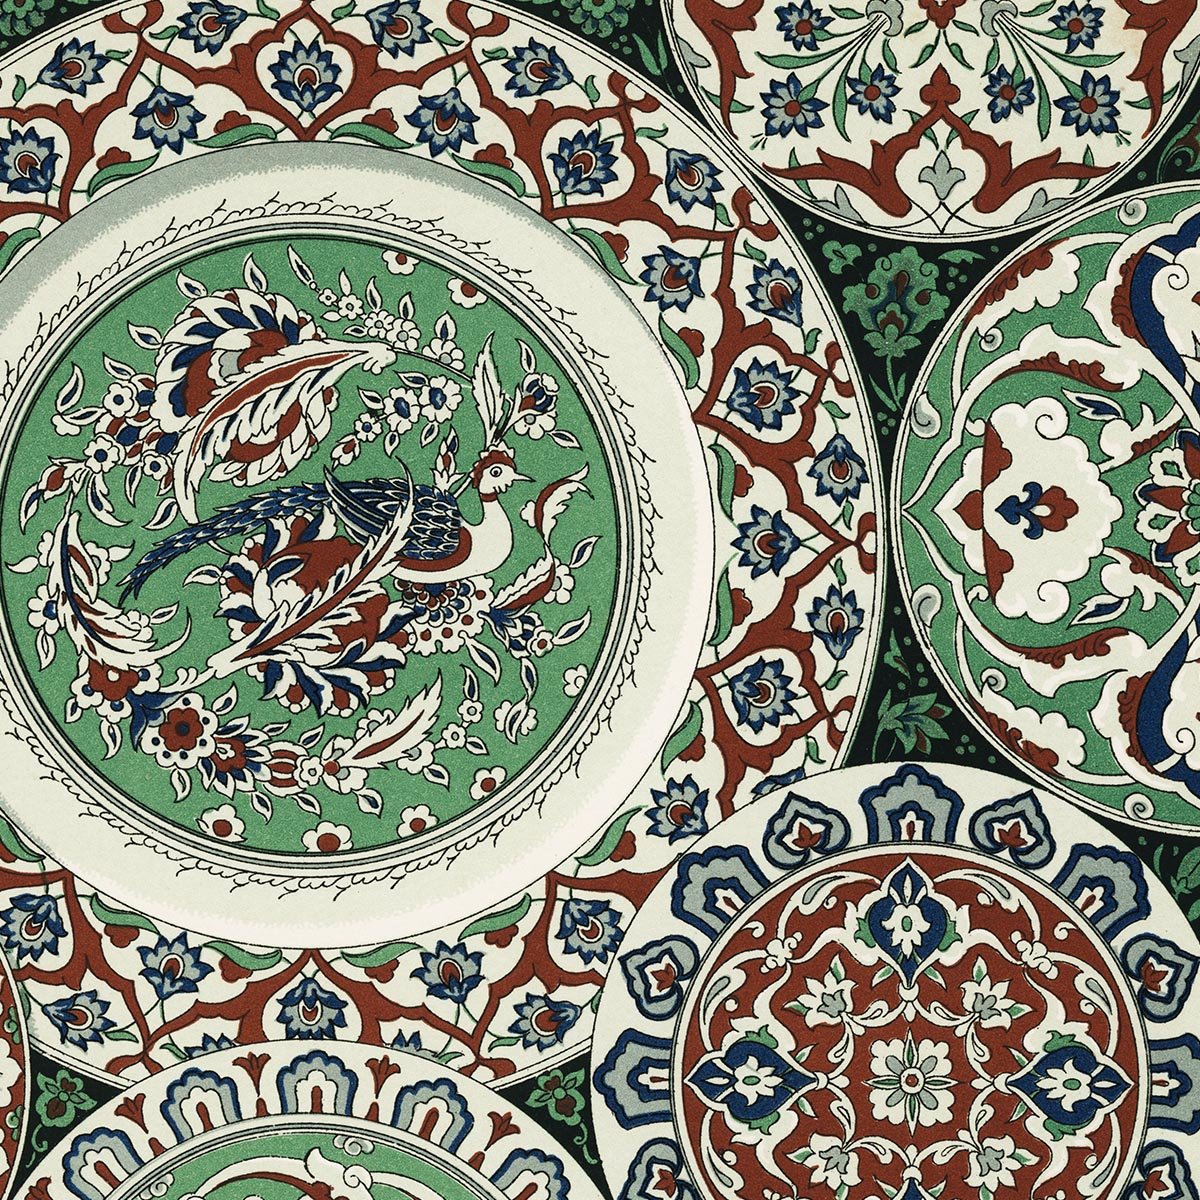 Persian Engraving Poster Nr 6